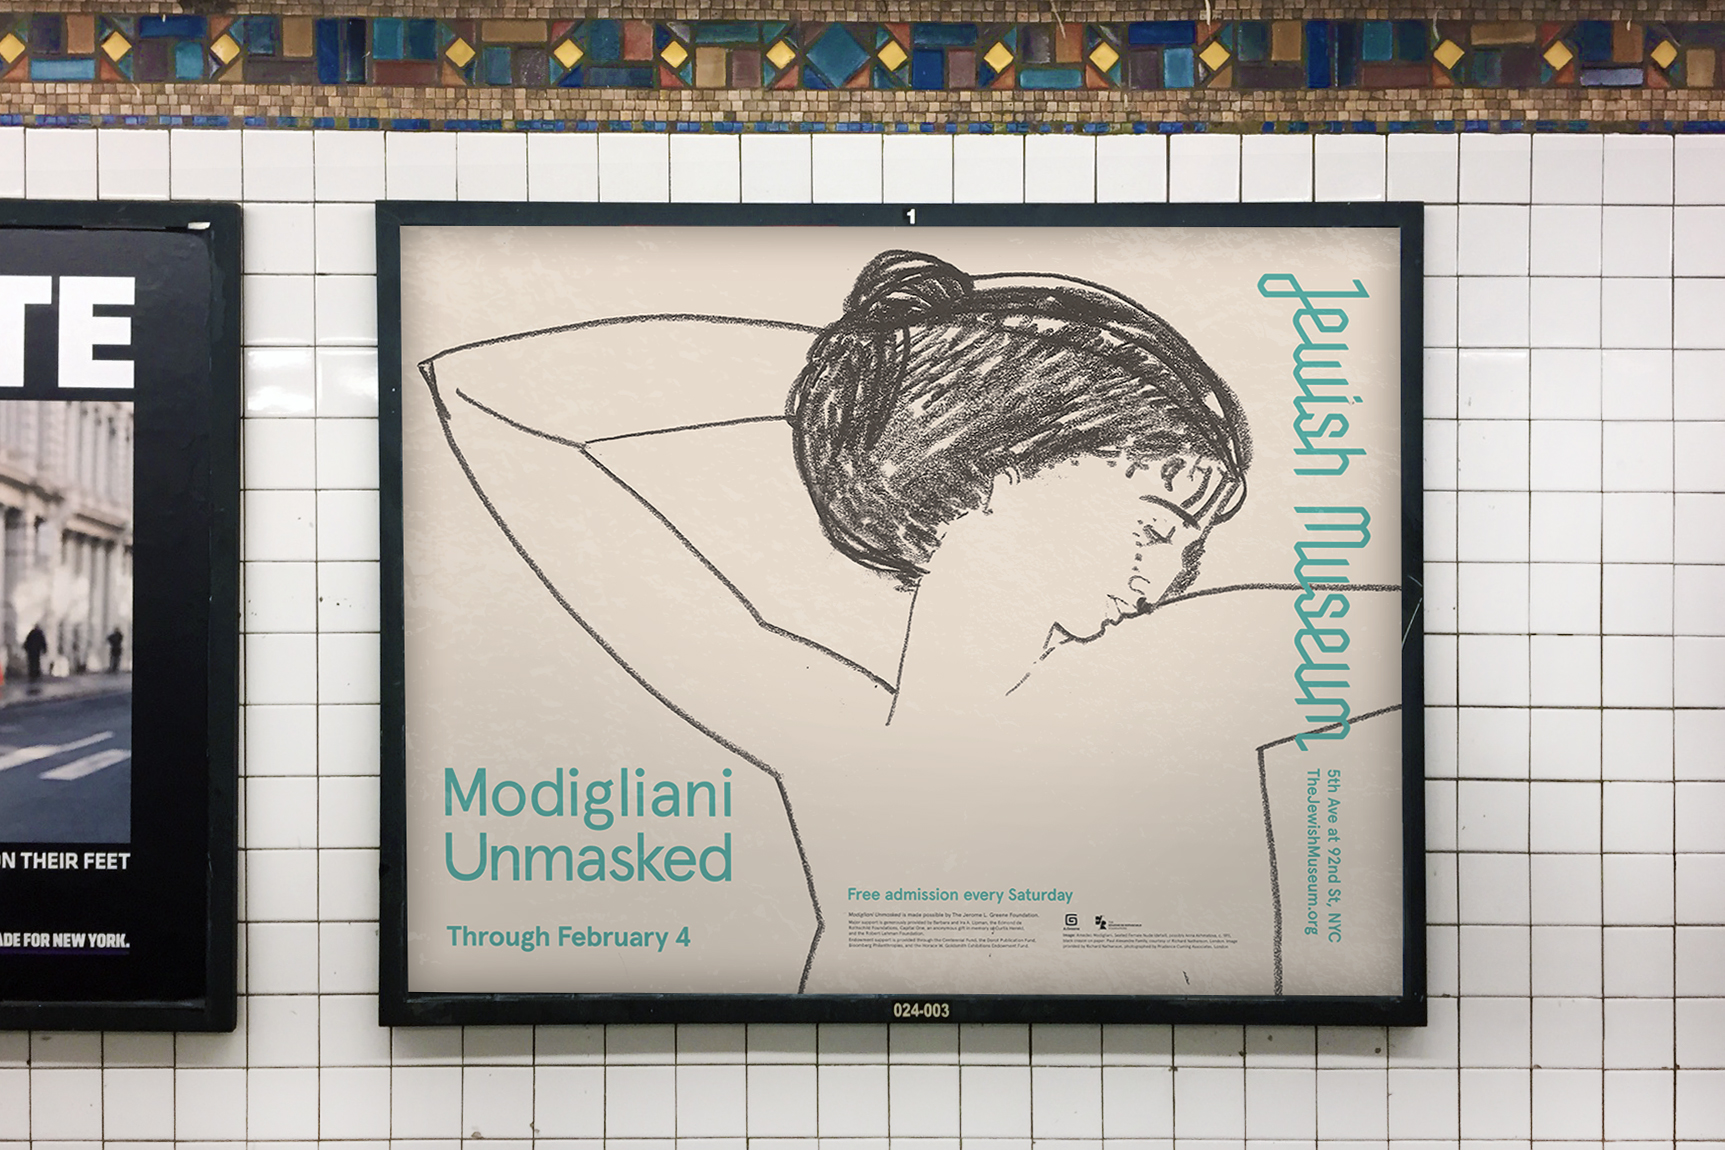 Modigliani Unmasked